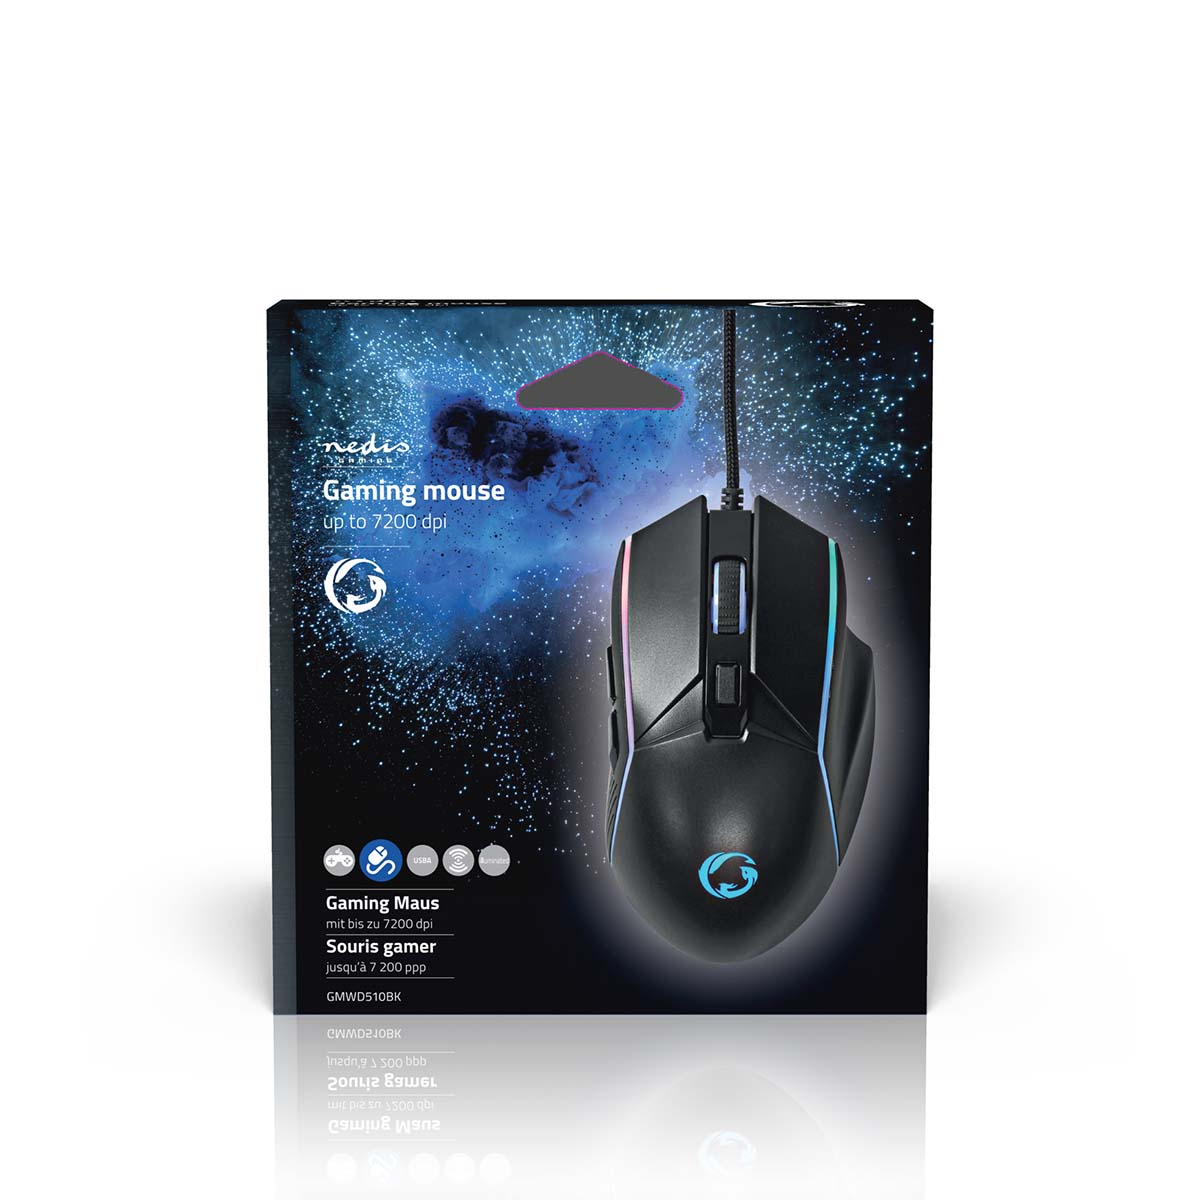 Nedis GMWD510BK Gaming Mouse Verdrahtet 1.5m LED 800 / 1200 / 2400 / 3200 / 4800 / 7200 dpi | Einstellbar DPI